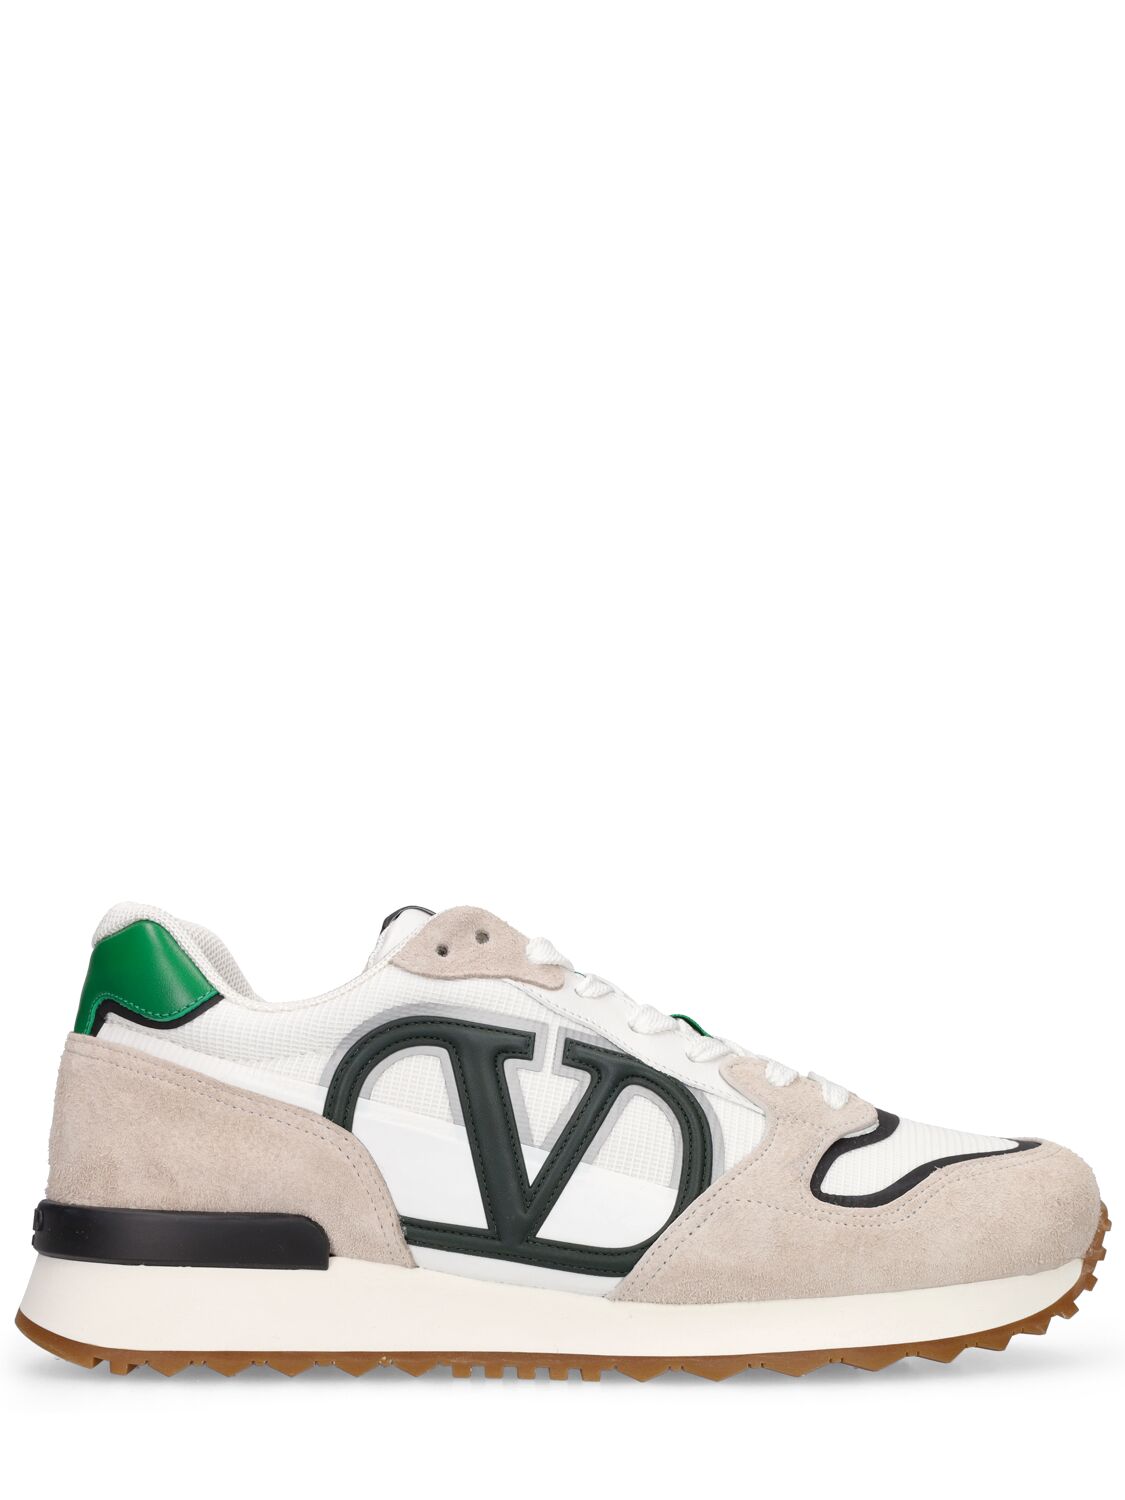 Valentino Garavani Logo Leather Low Top Sneakers In Beige,green